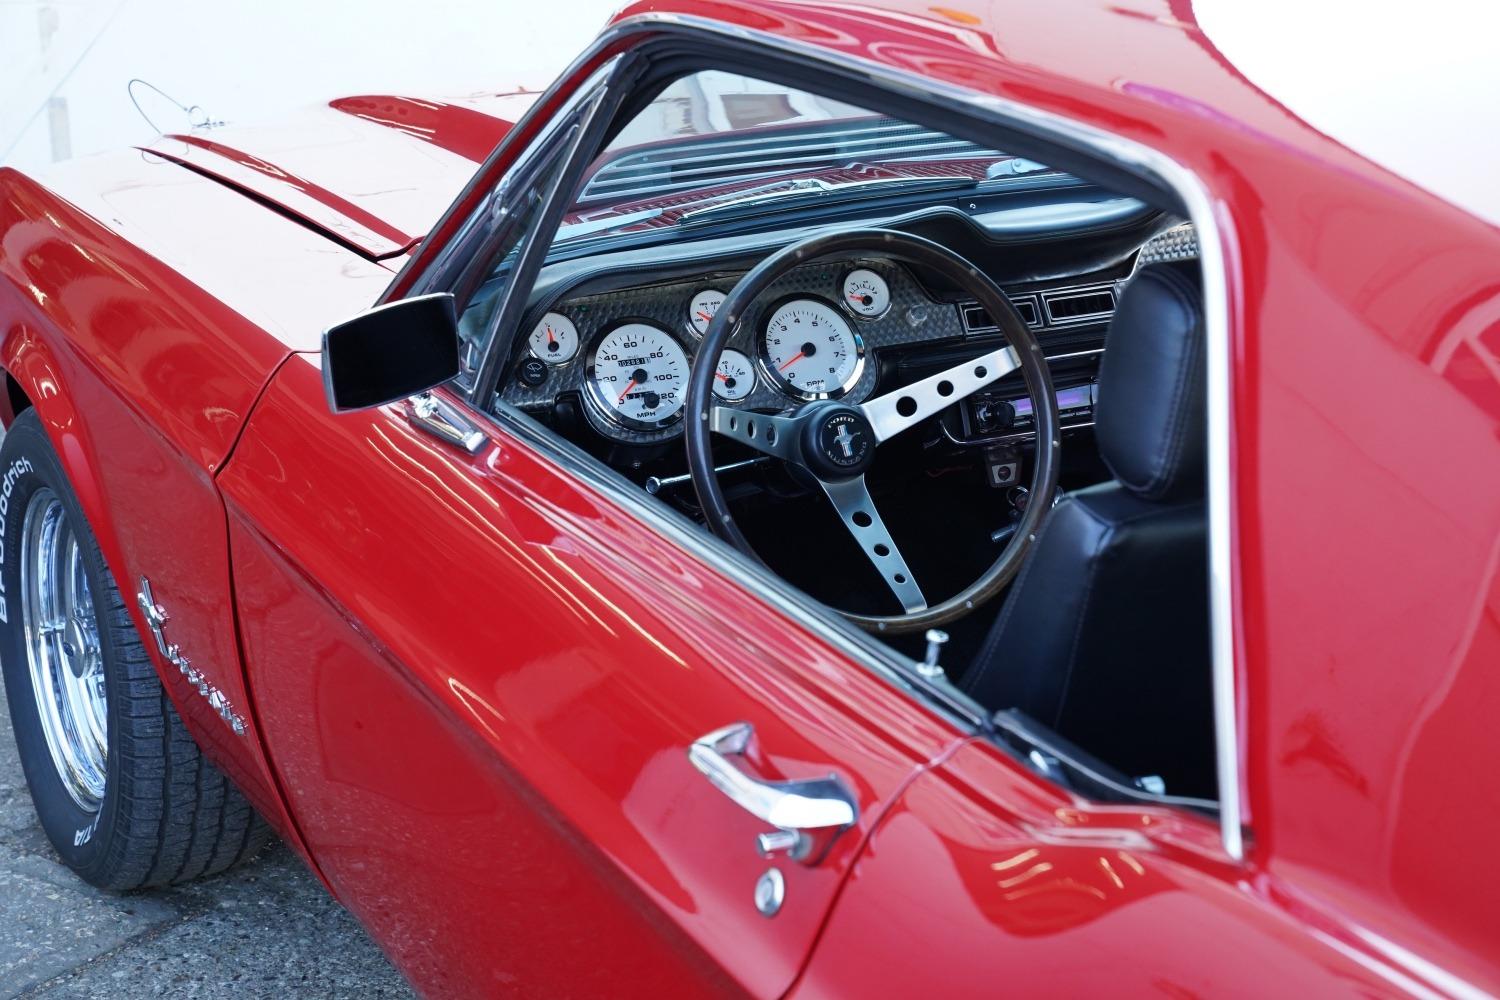 Cherry Red 1967 Mustang